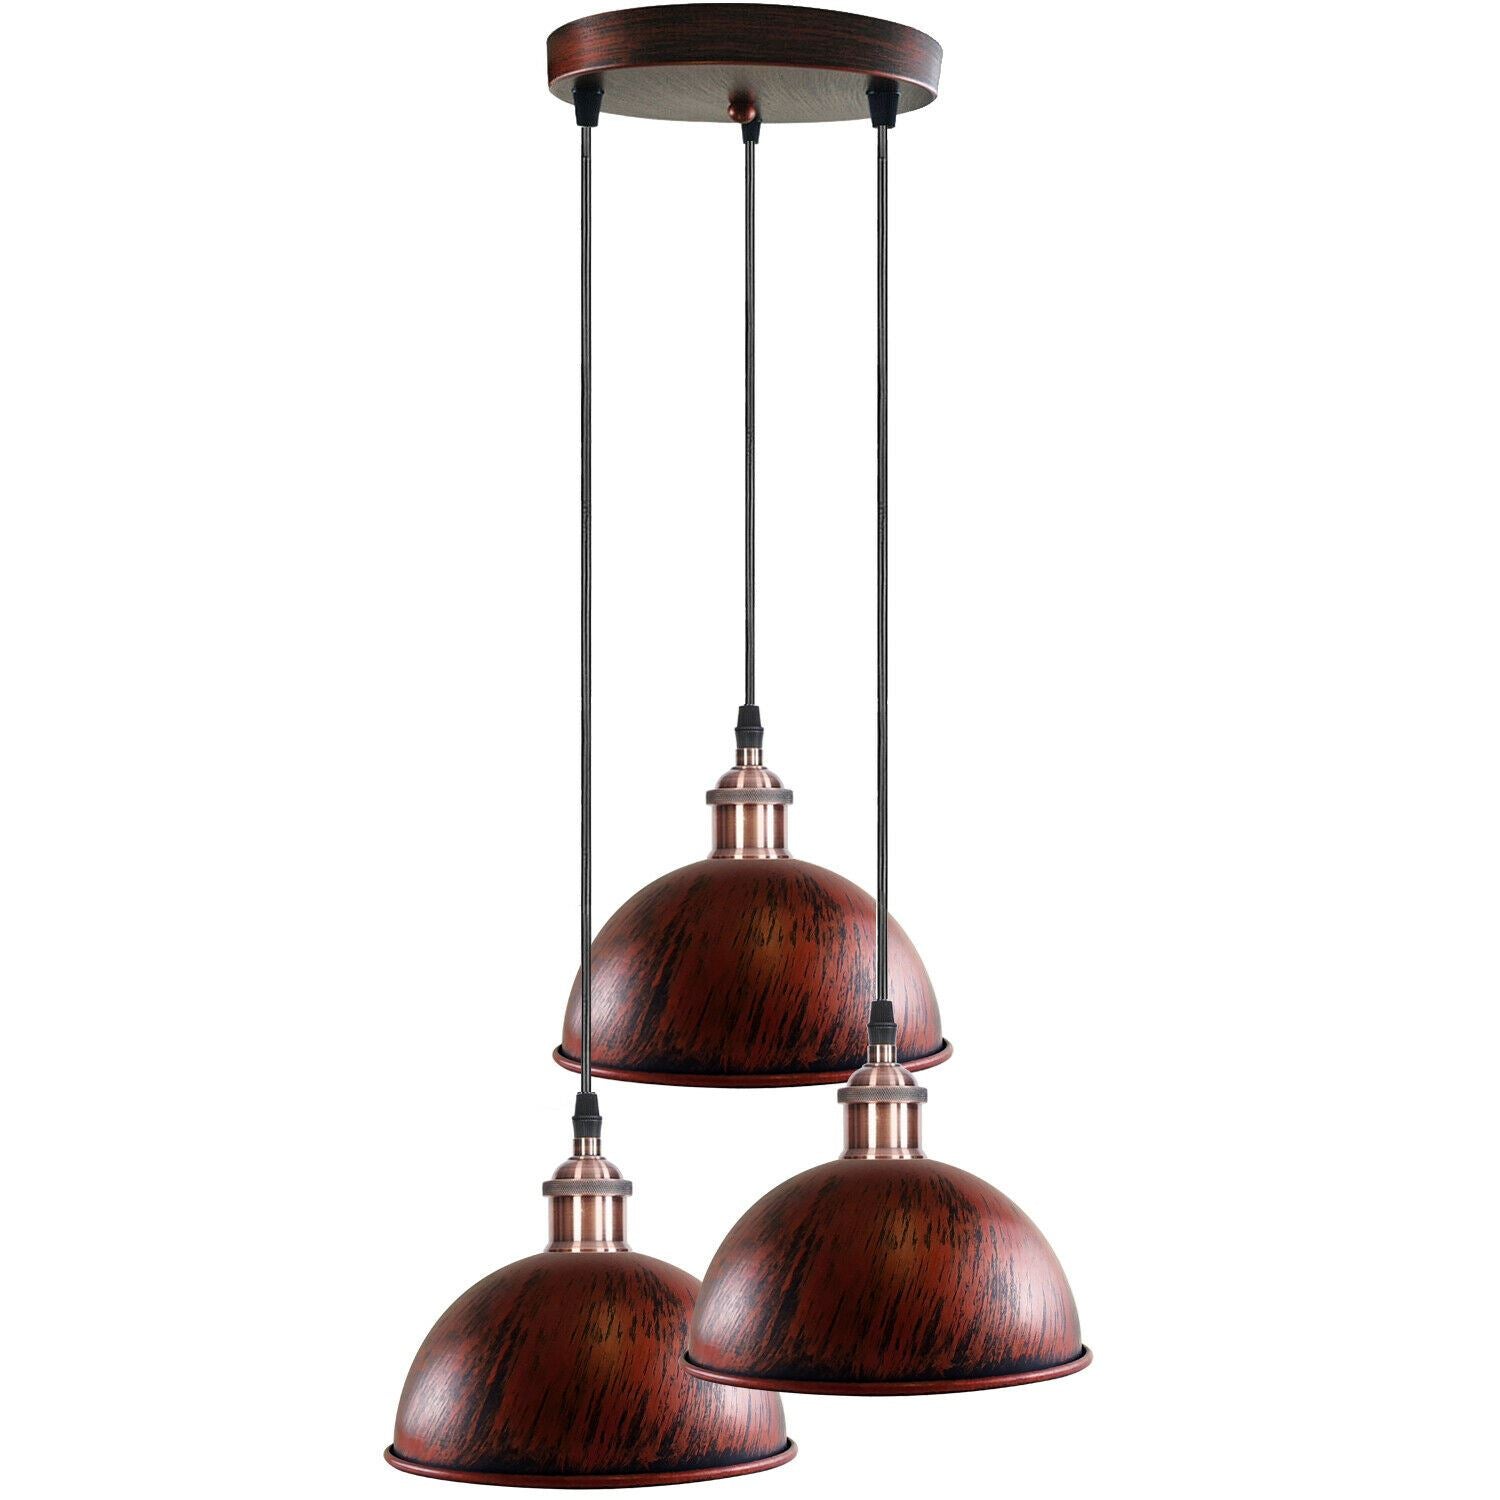 Vintage Industrial Retro 3Head Dome Ceiling Pendant Lamp Shade Light 